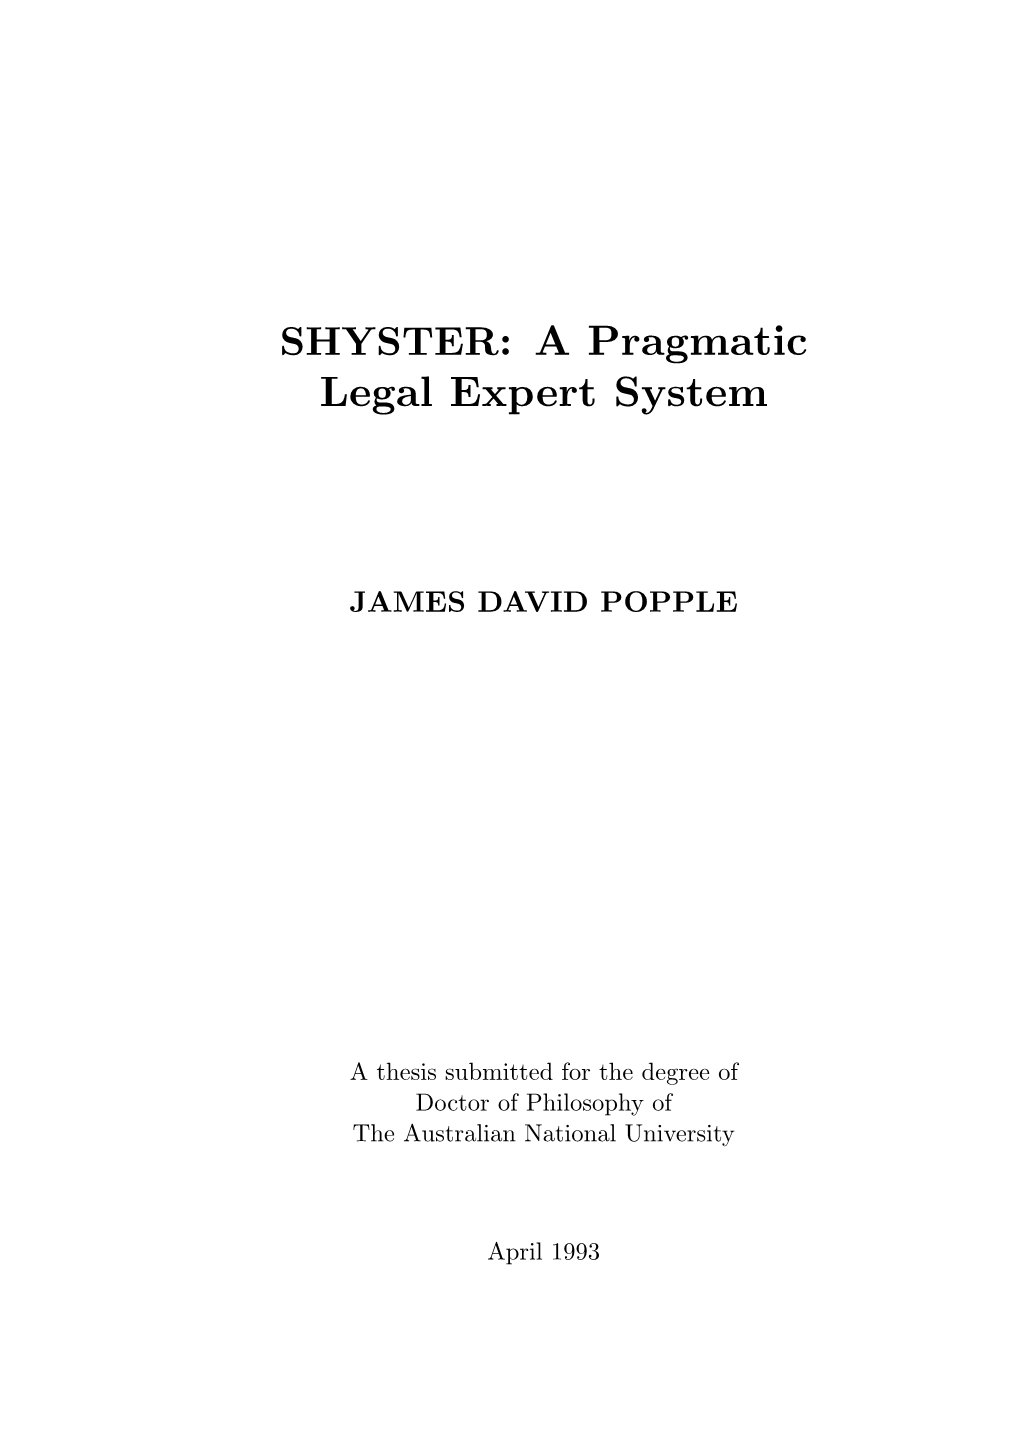 SHYSTER: a Pragmatic Legal Expert System